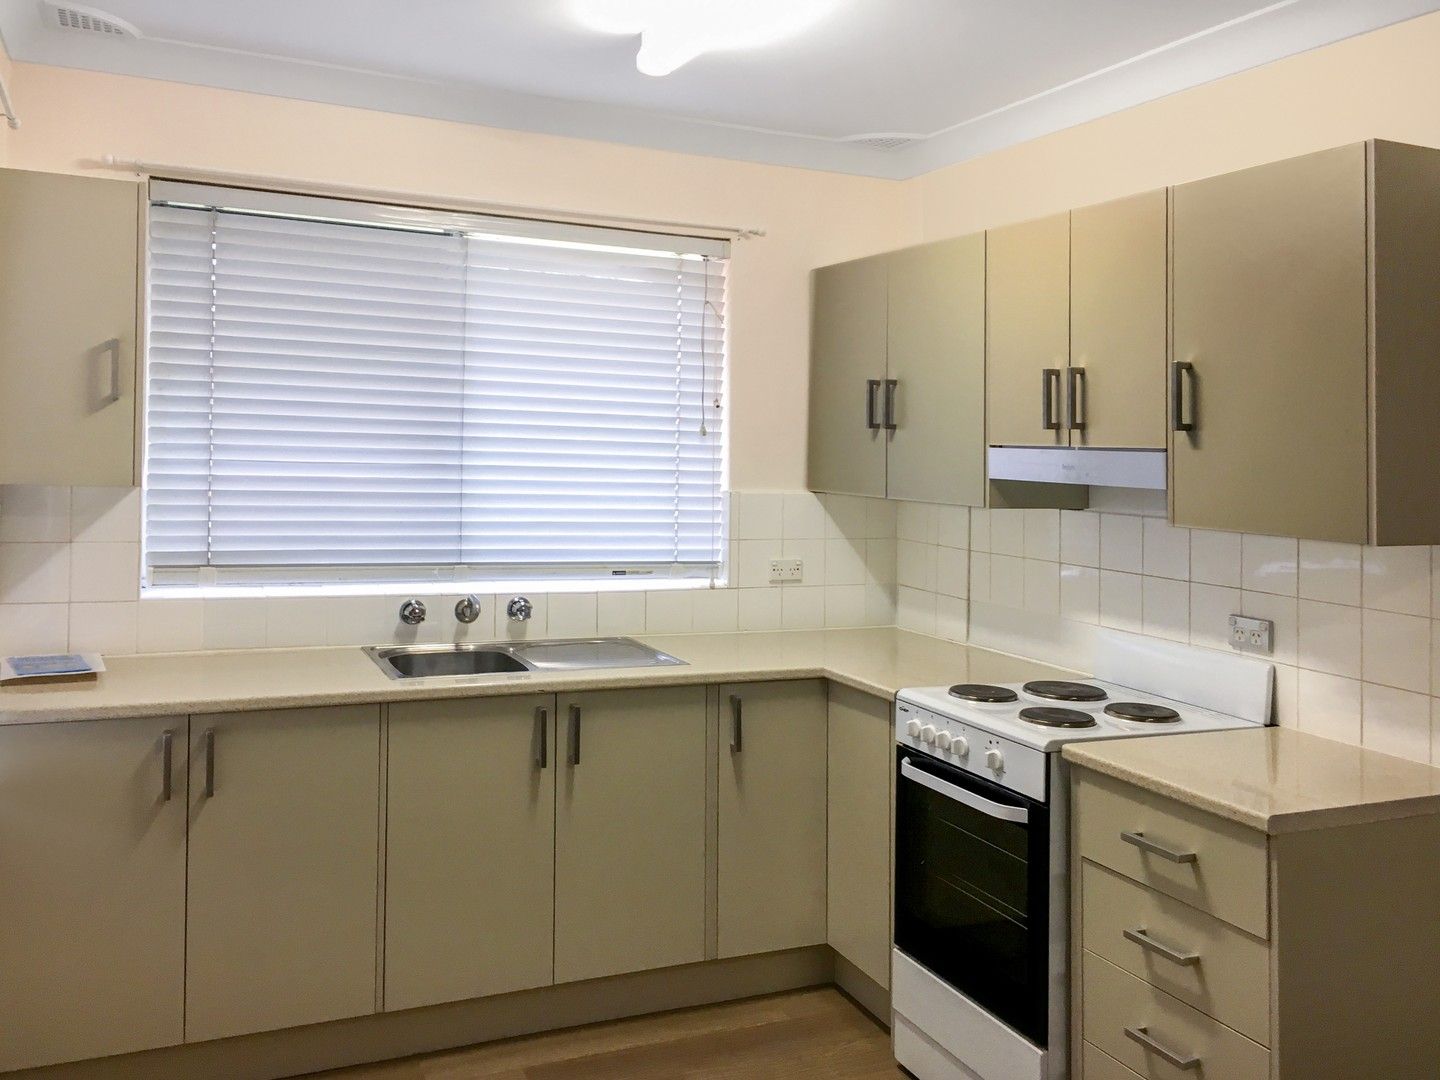 2 bedrooms Apartment / Unit / Flat in 12/98 Dumaresq Street CAMPBELLTOWN NSW, 2560